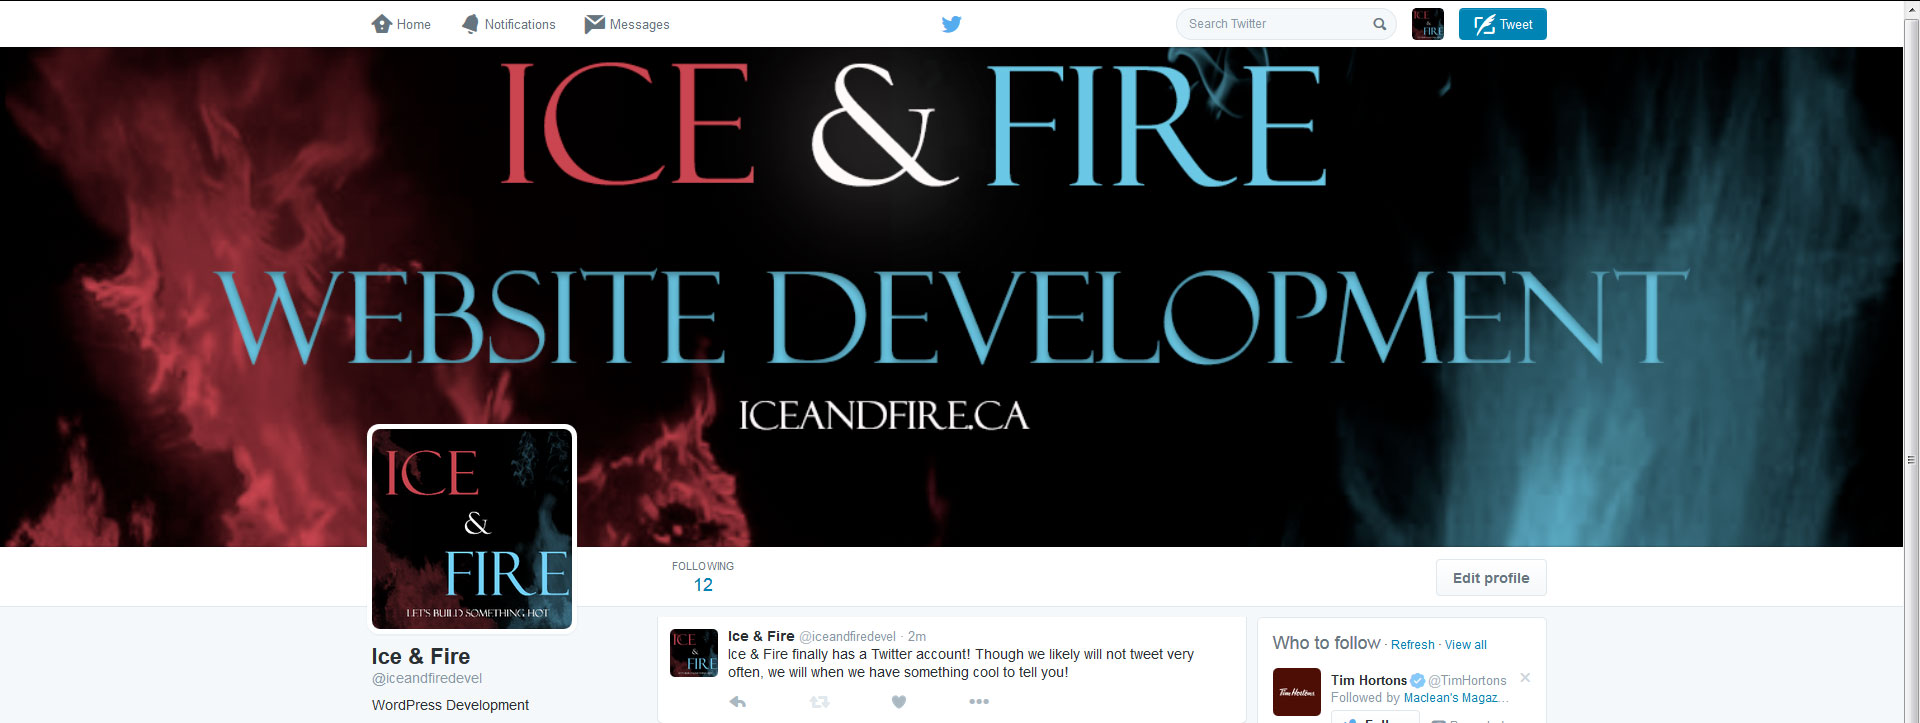 Ice & Fire on Twitter